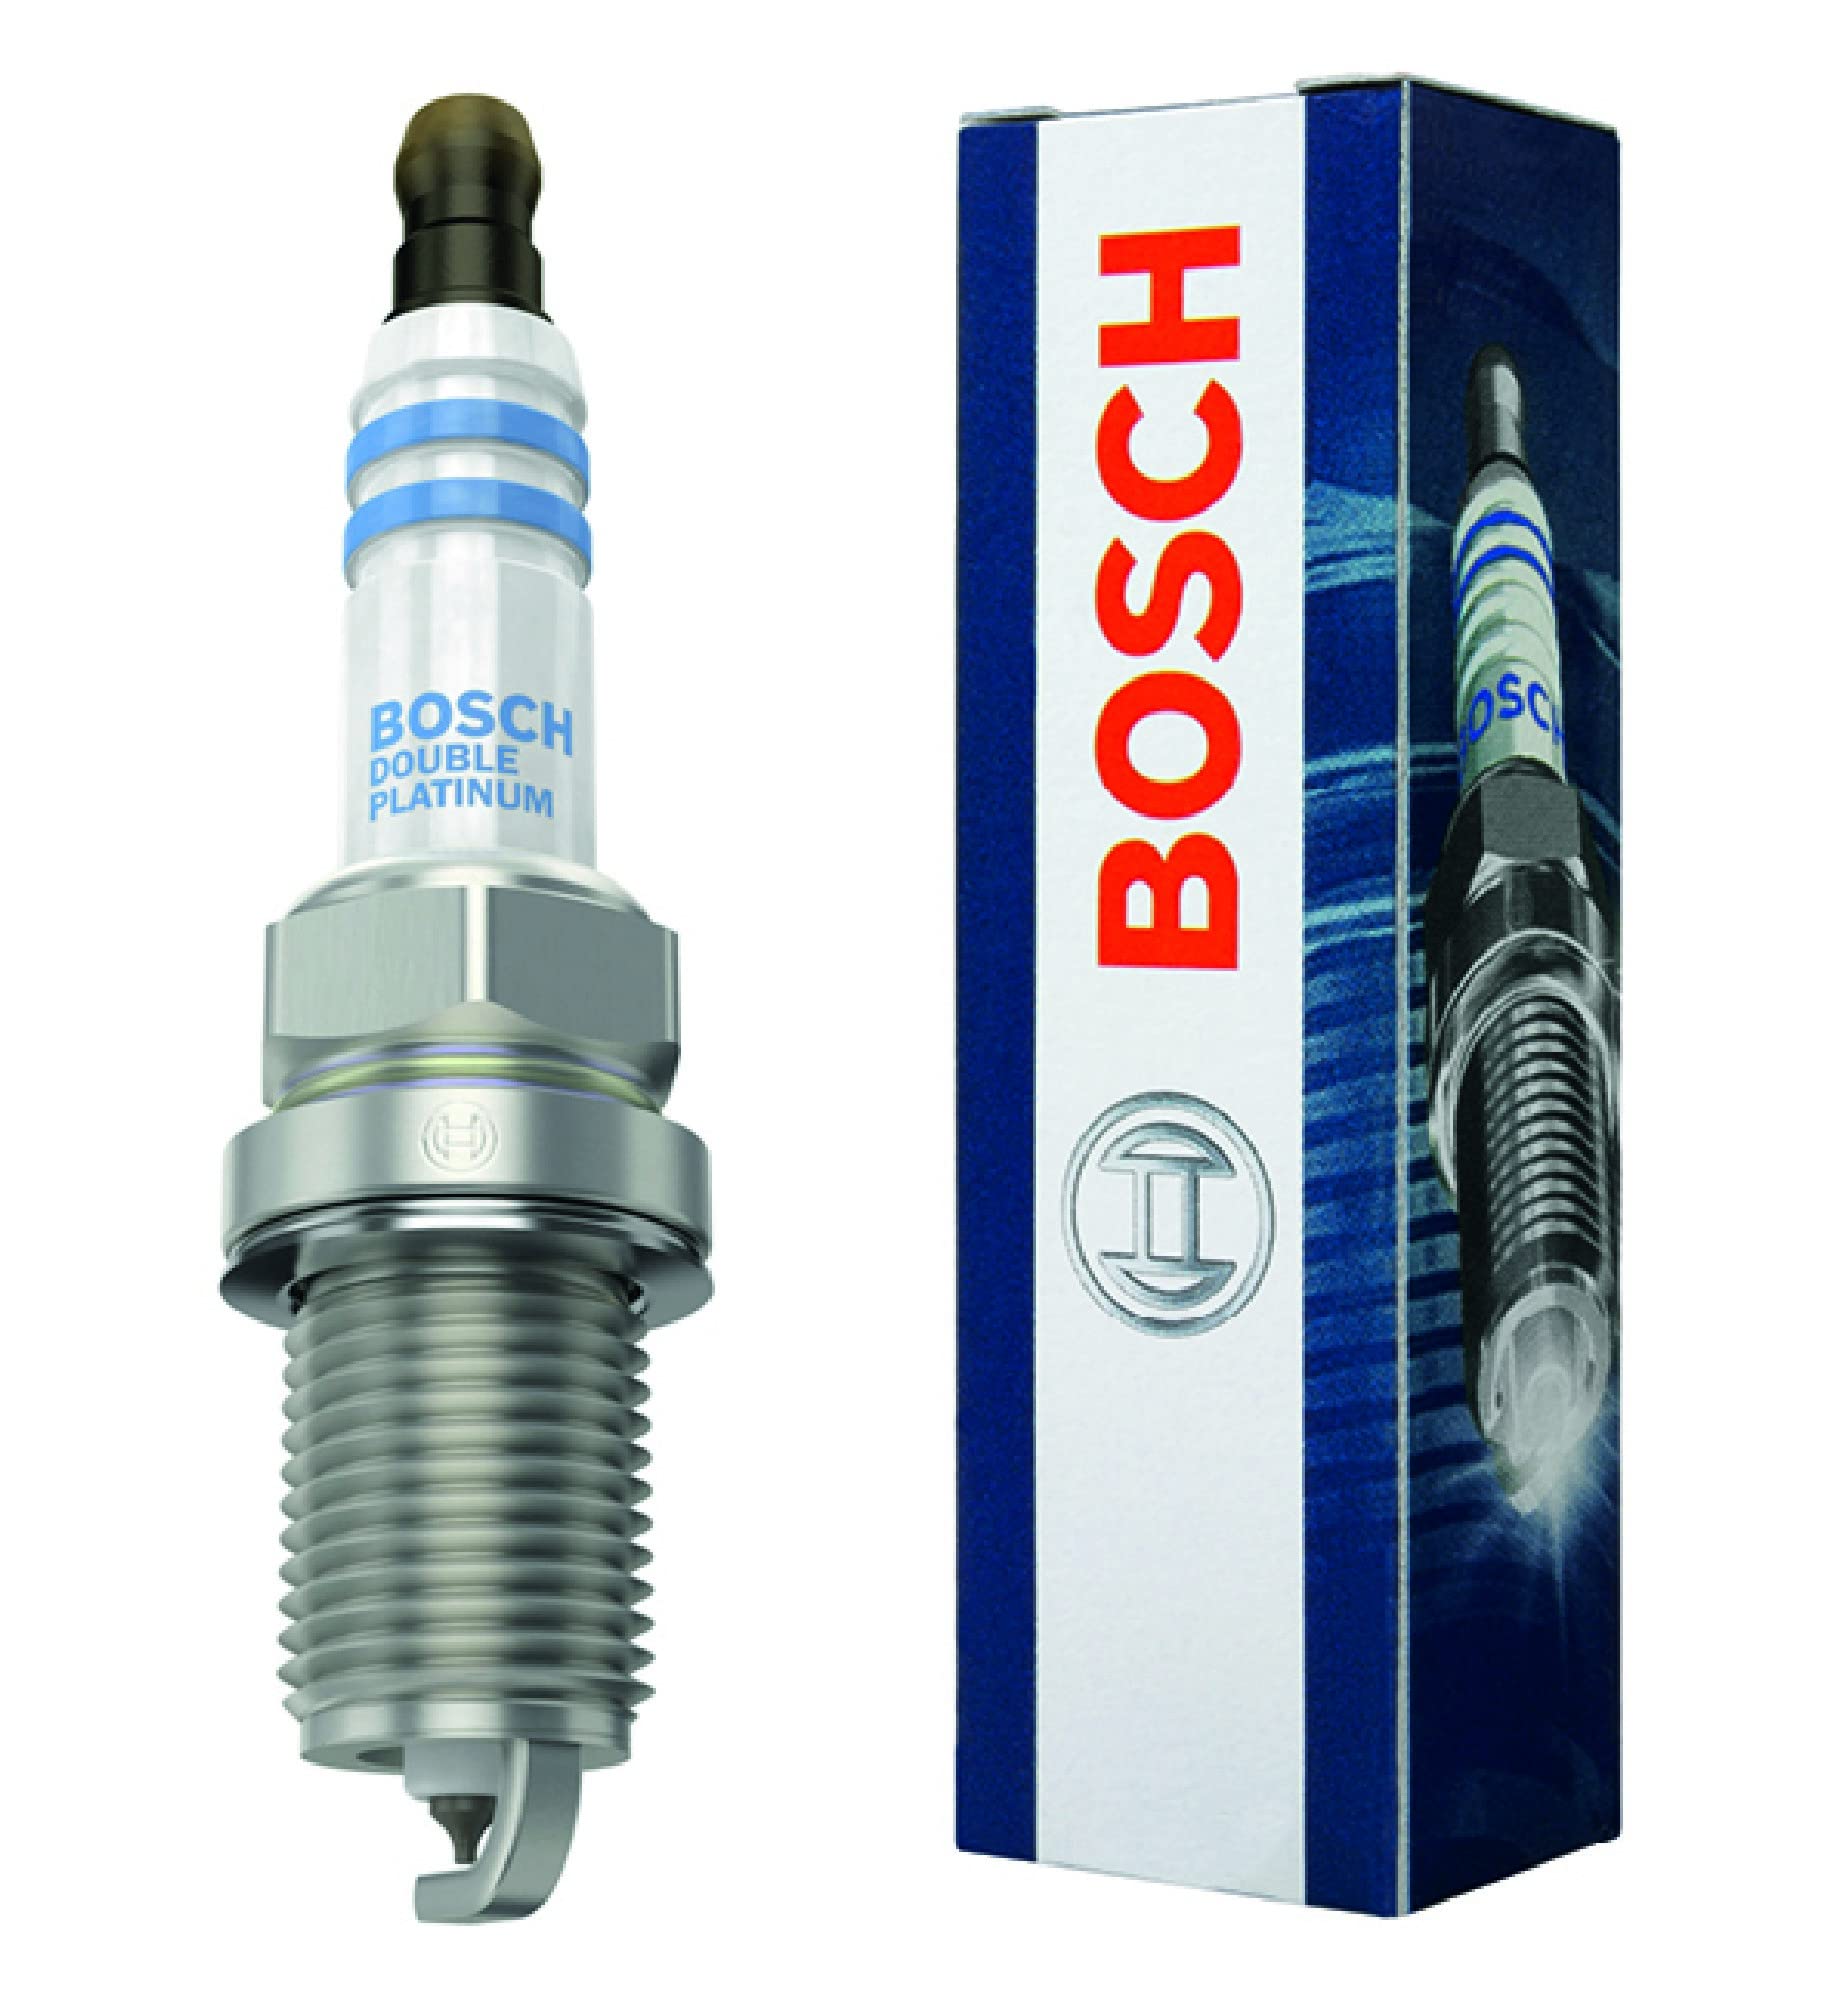 Bosch FR6KPP33X - Zündkerzen Double Platinum - 1 Stück von Bosch Automotive